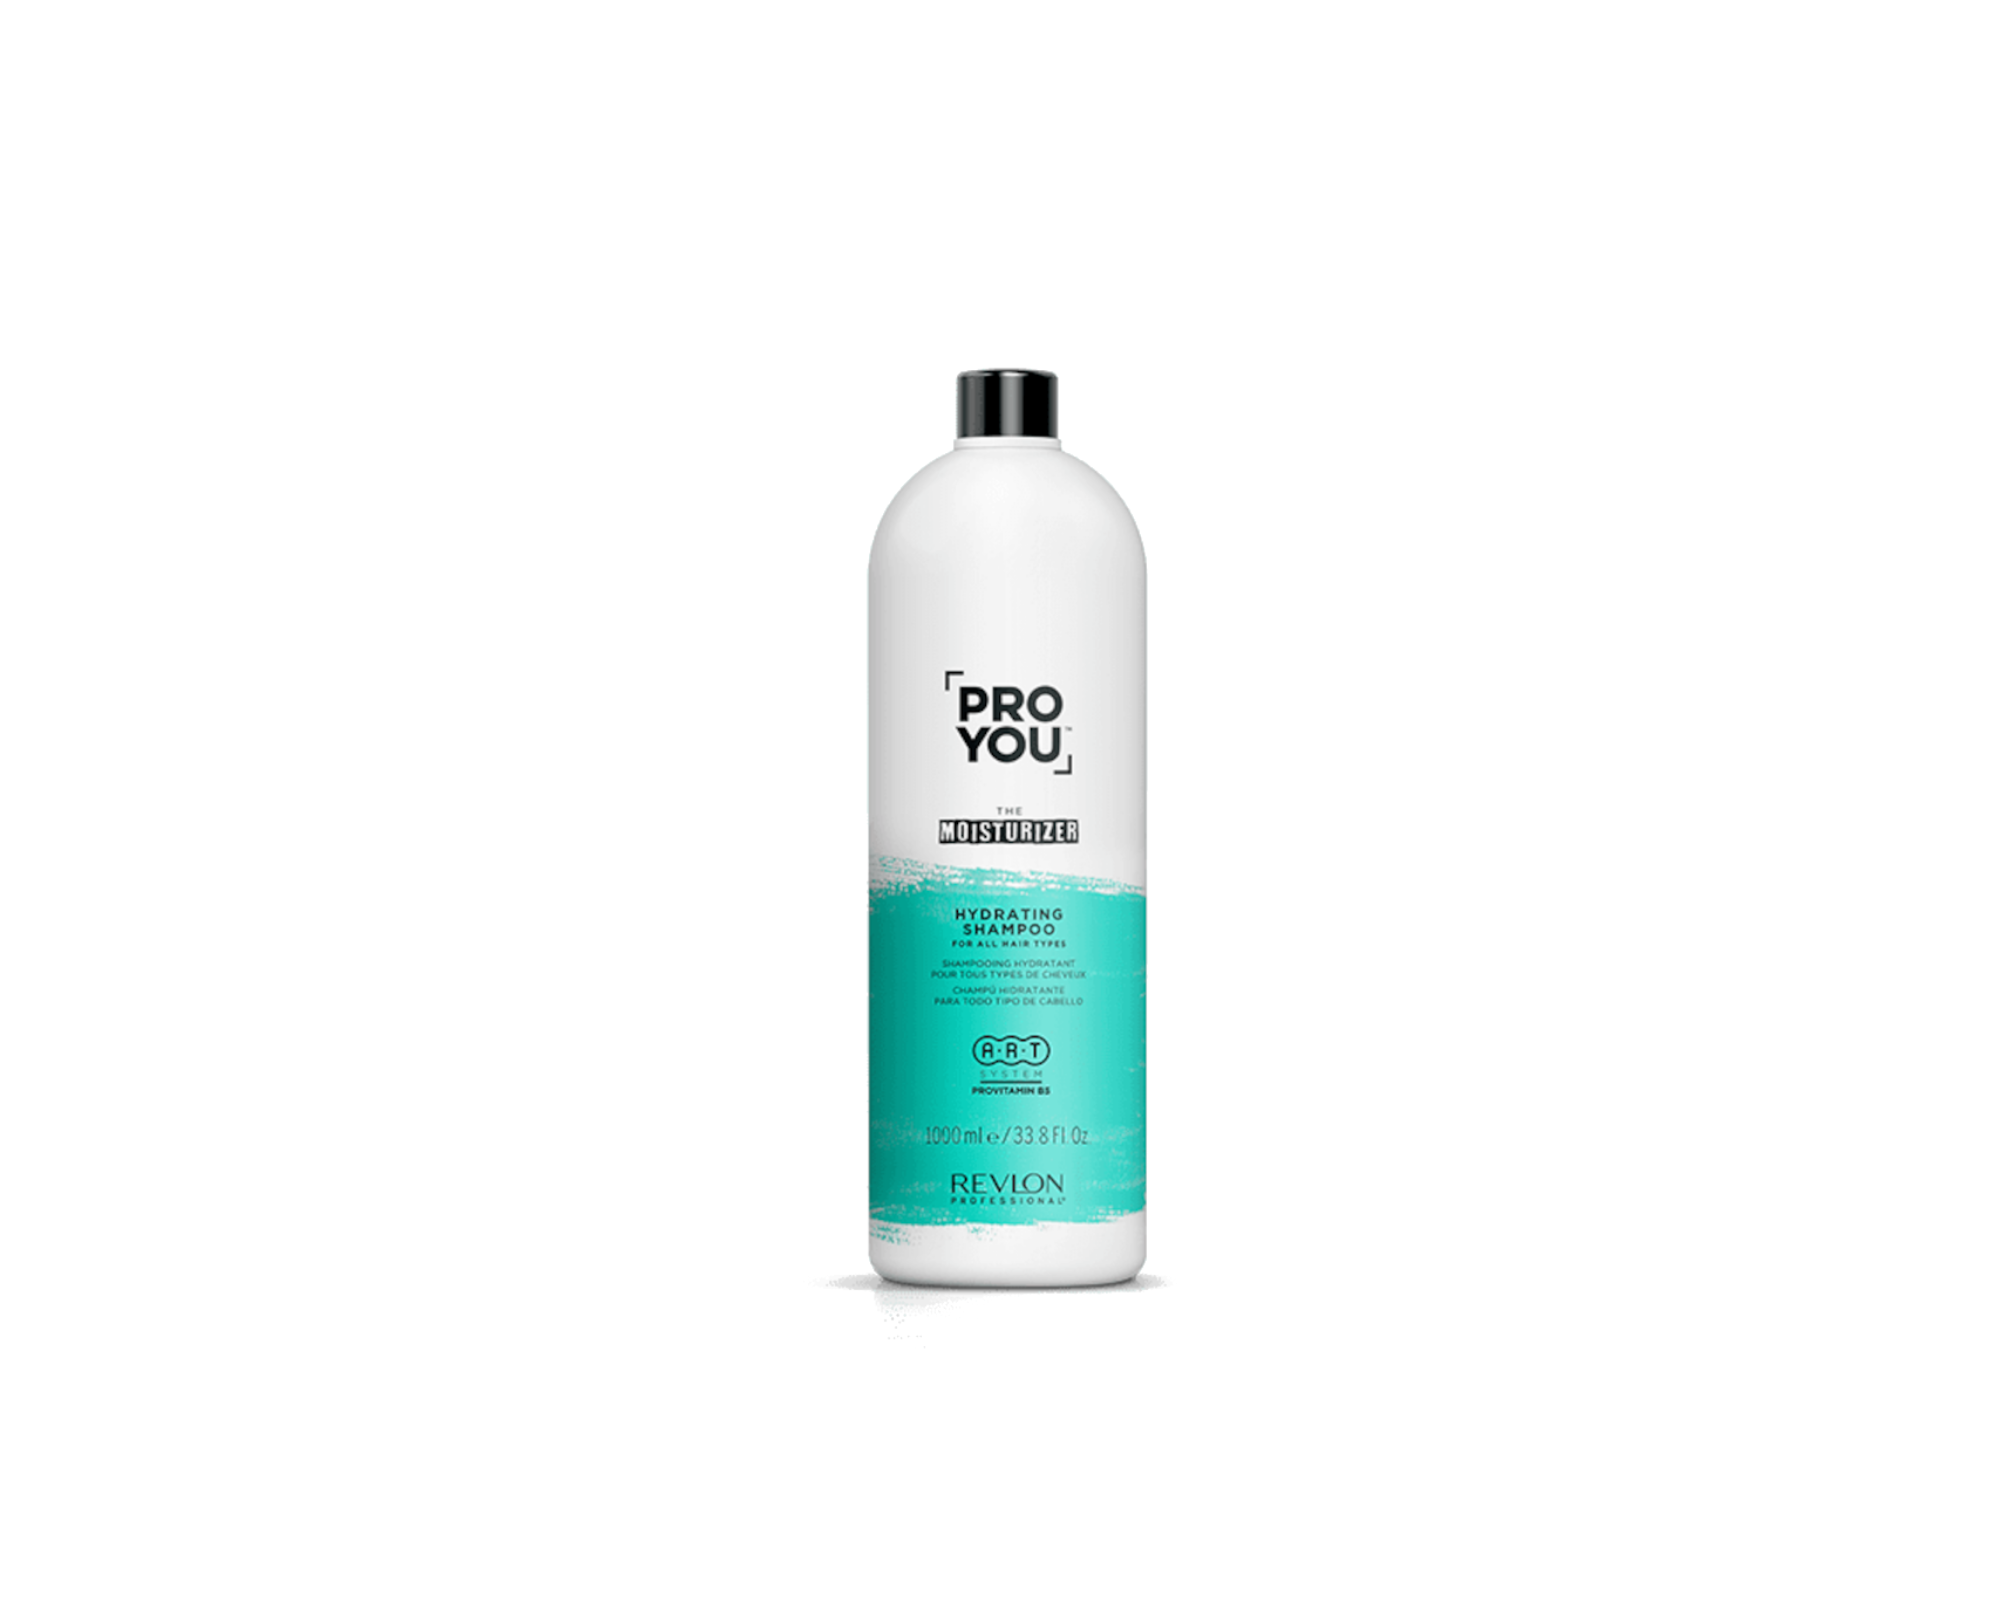 Revlon Pro You Hydrating Shampoo - "The Moisturizer"